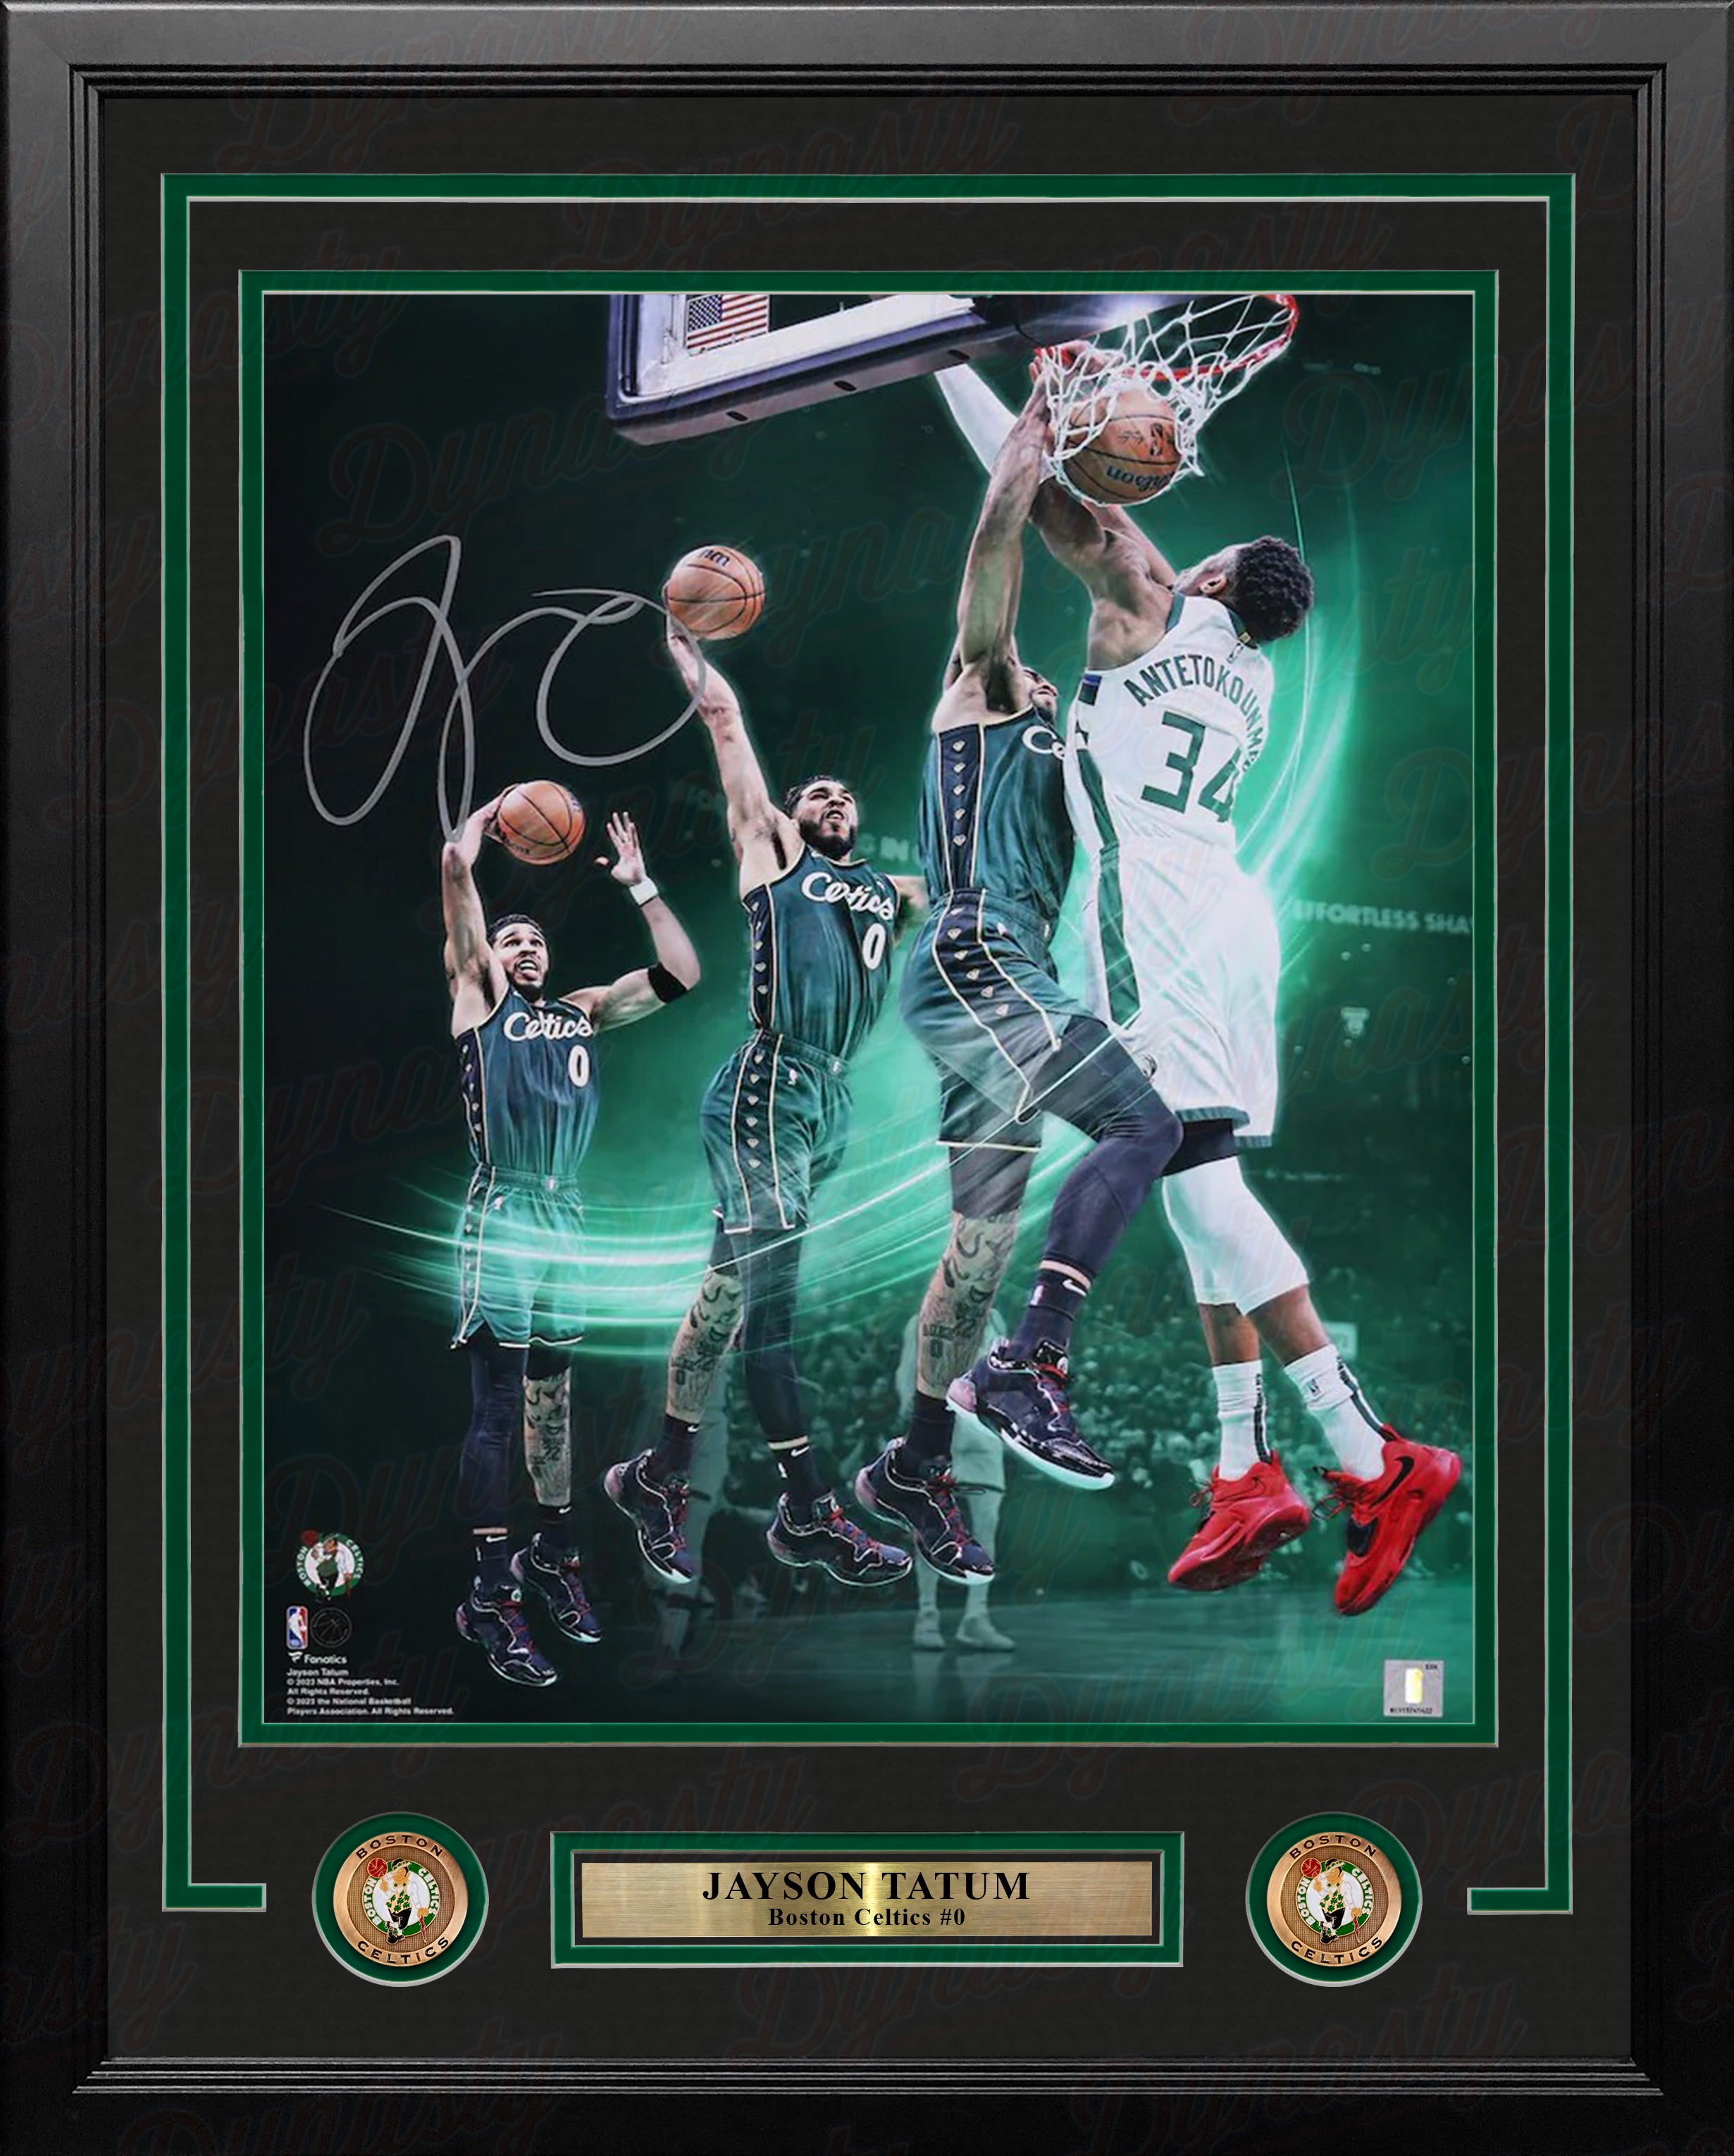 Bill Russell Boston Celtics Autographed Framed Basketball Jersey - Dynasty  Sports & Framing